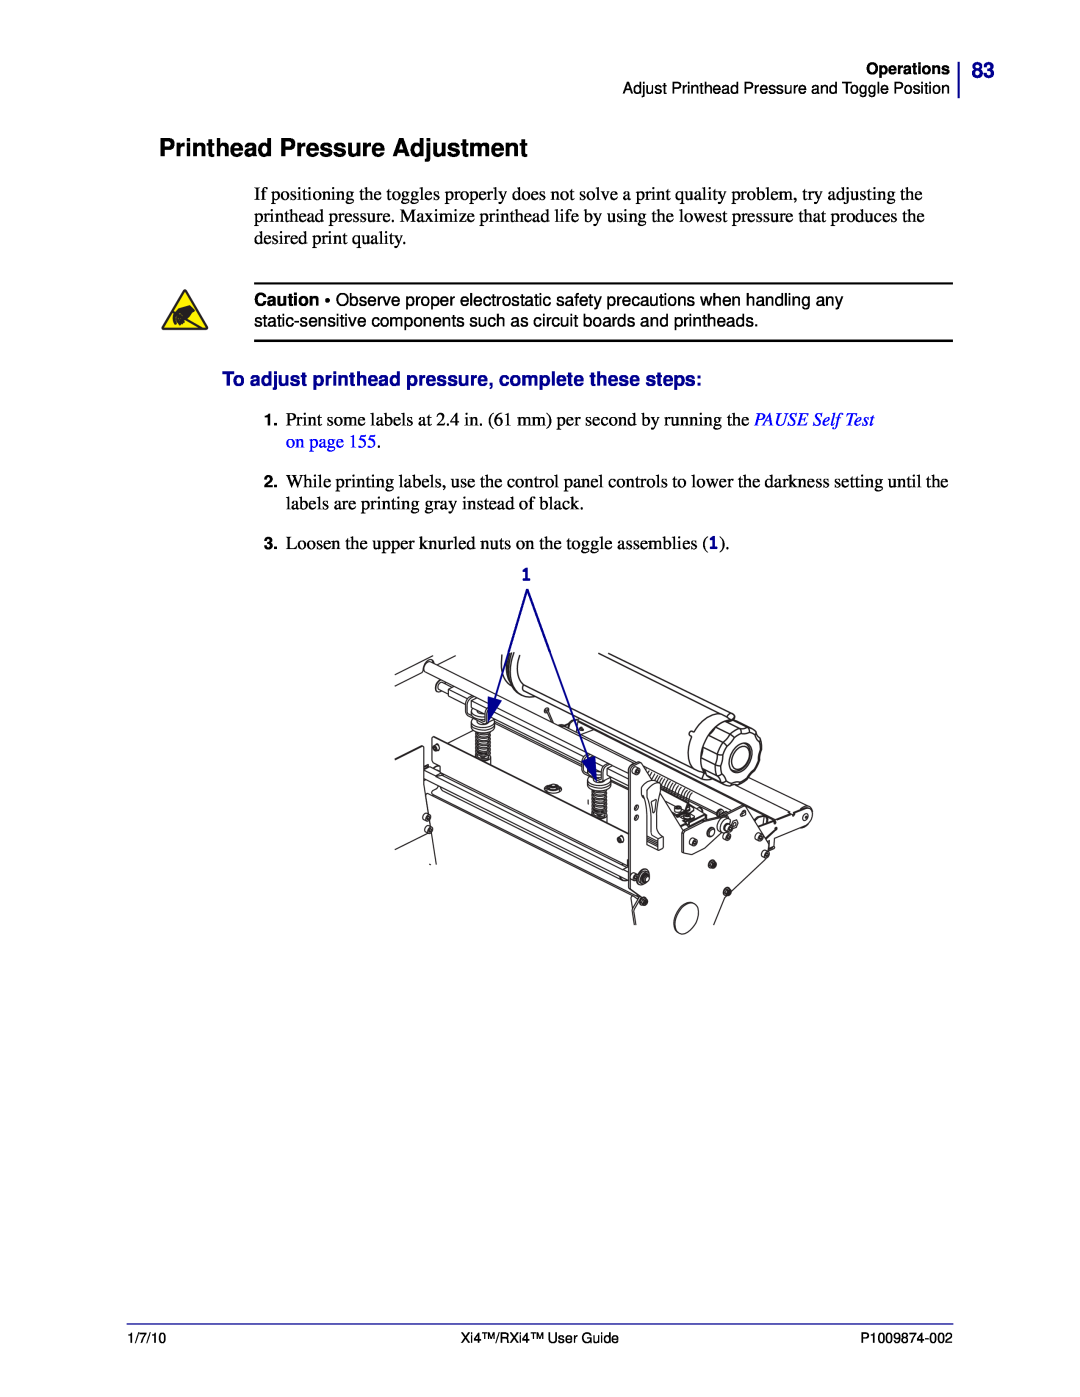 Zebra Technologies 17280100000, XI4TM Printhead Pressure Adjustment, To adjust printhead pressure, complete these steps 